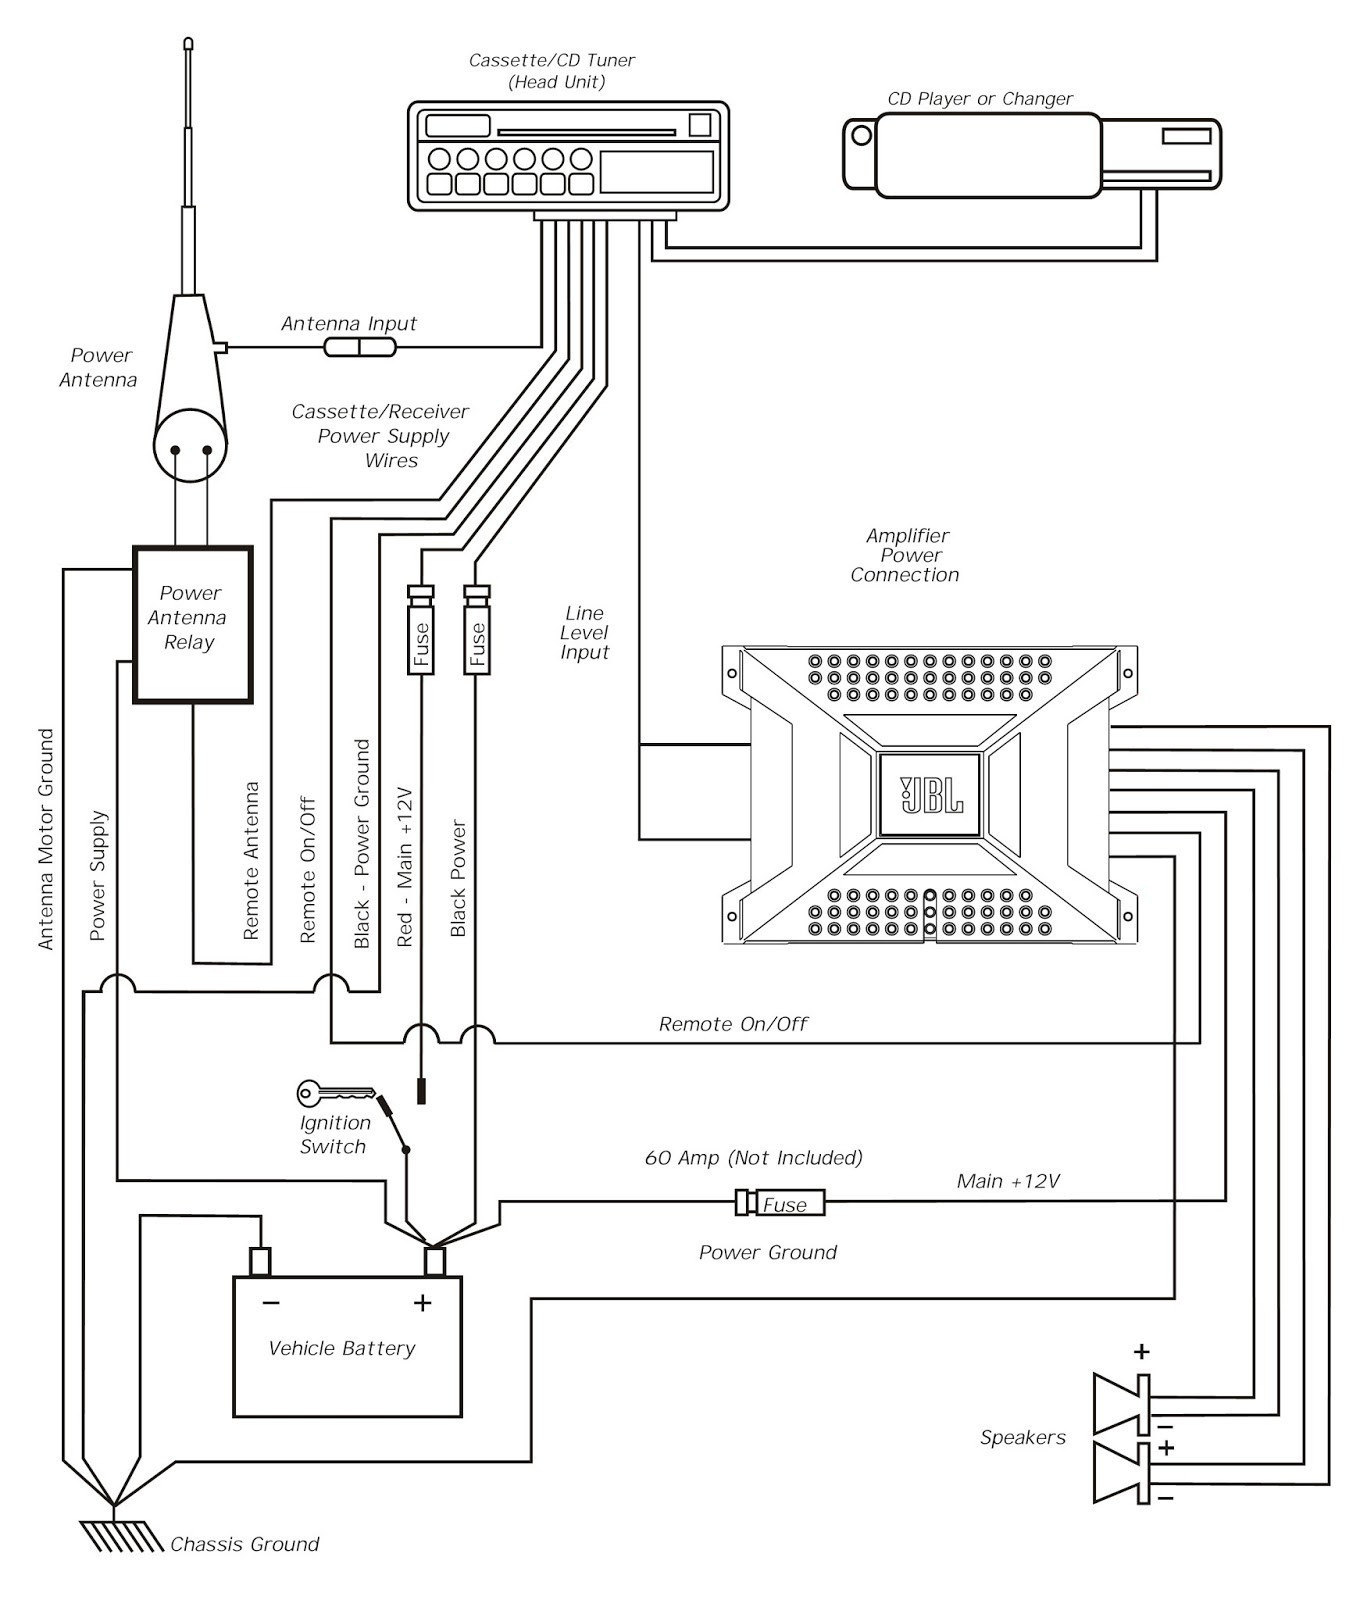 55 Awesome Bulldog Security Wiring Diagram Image | Wiring Diagram - Bulldog Remote Start Wiring Diagram